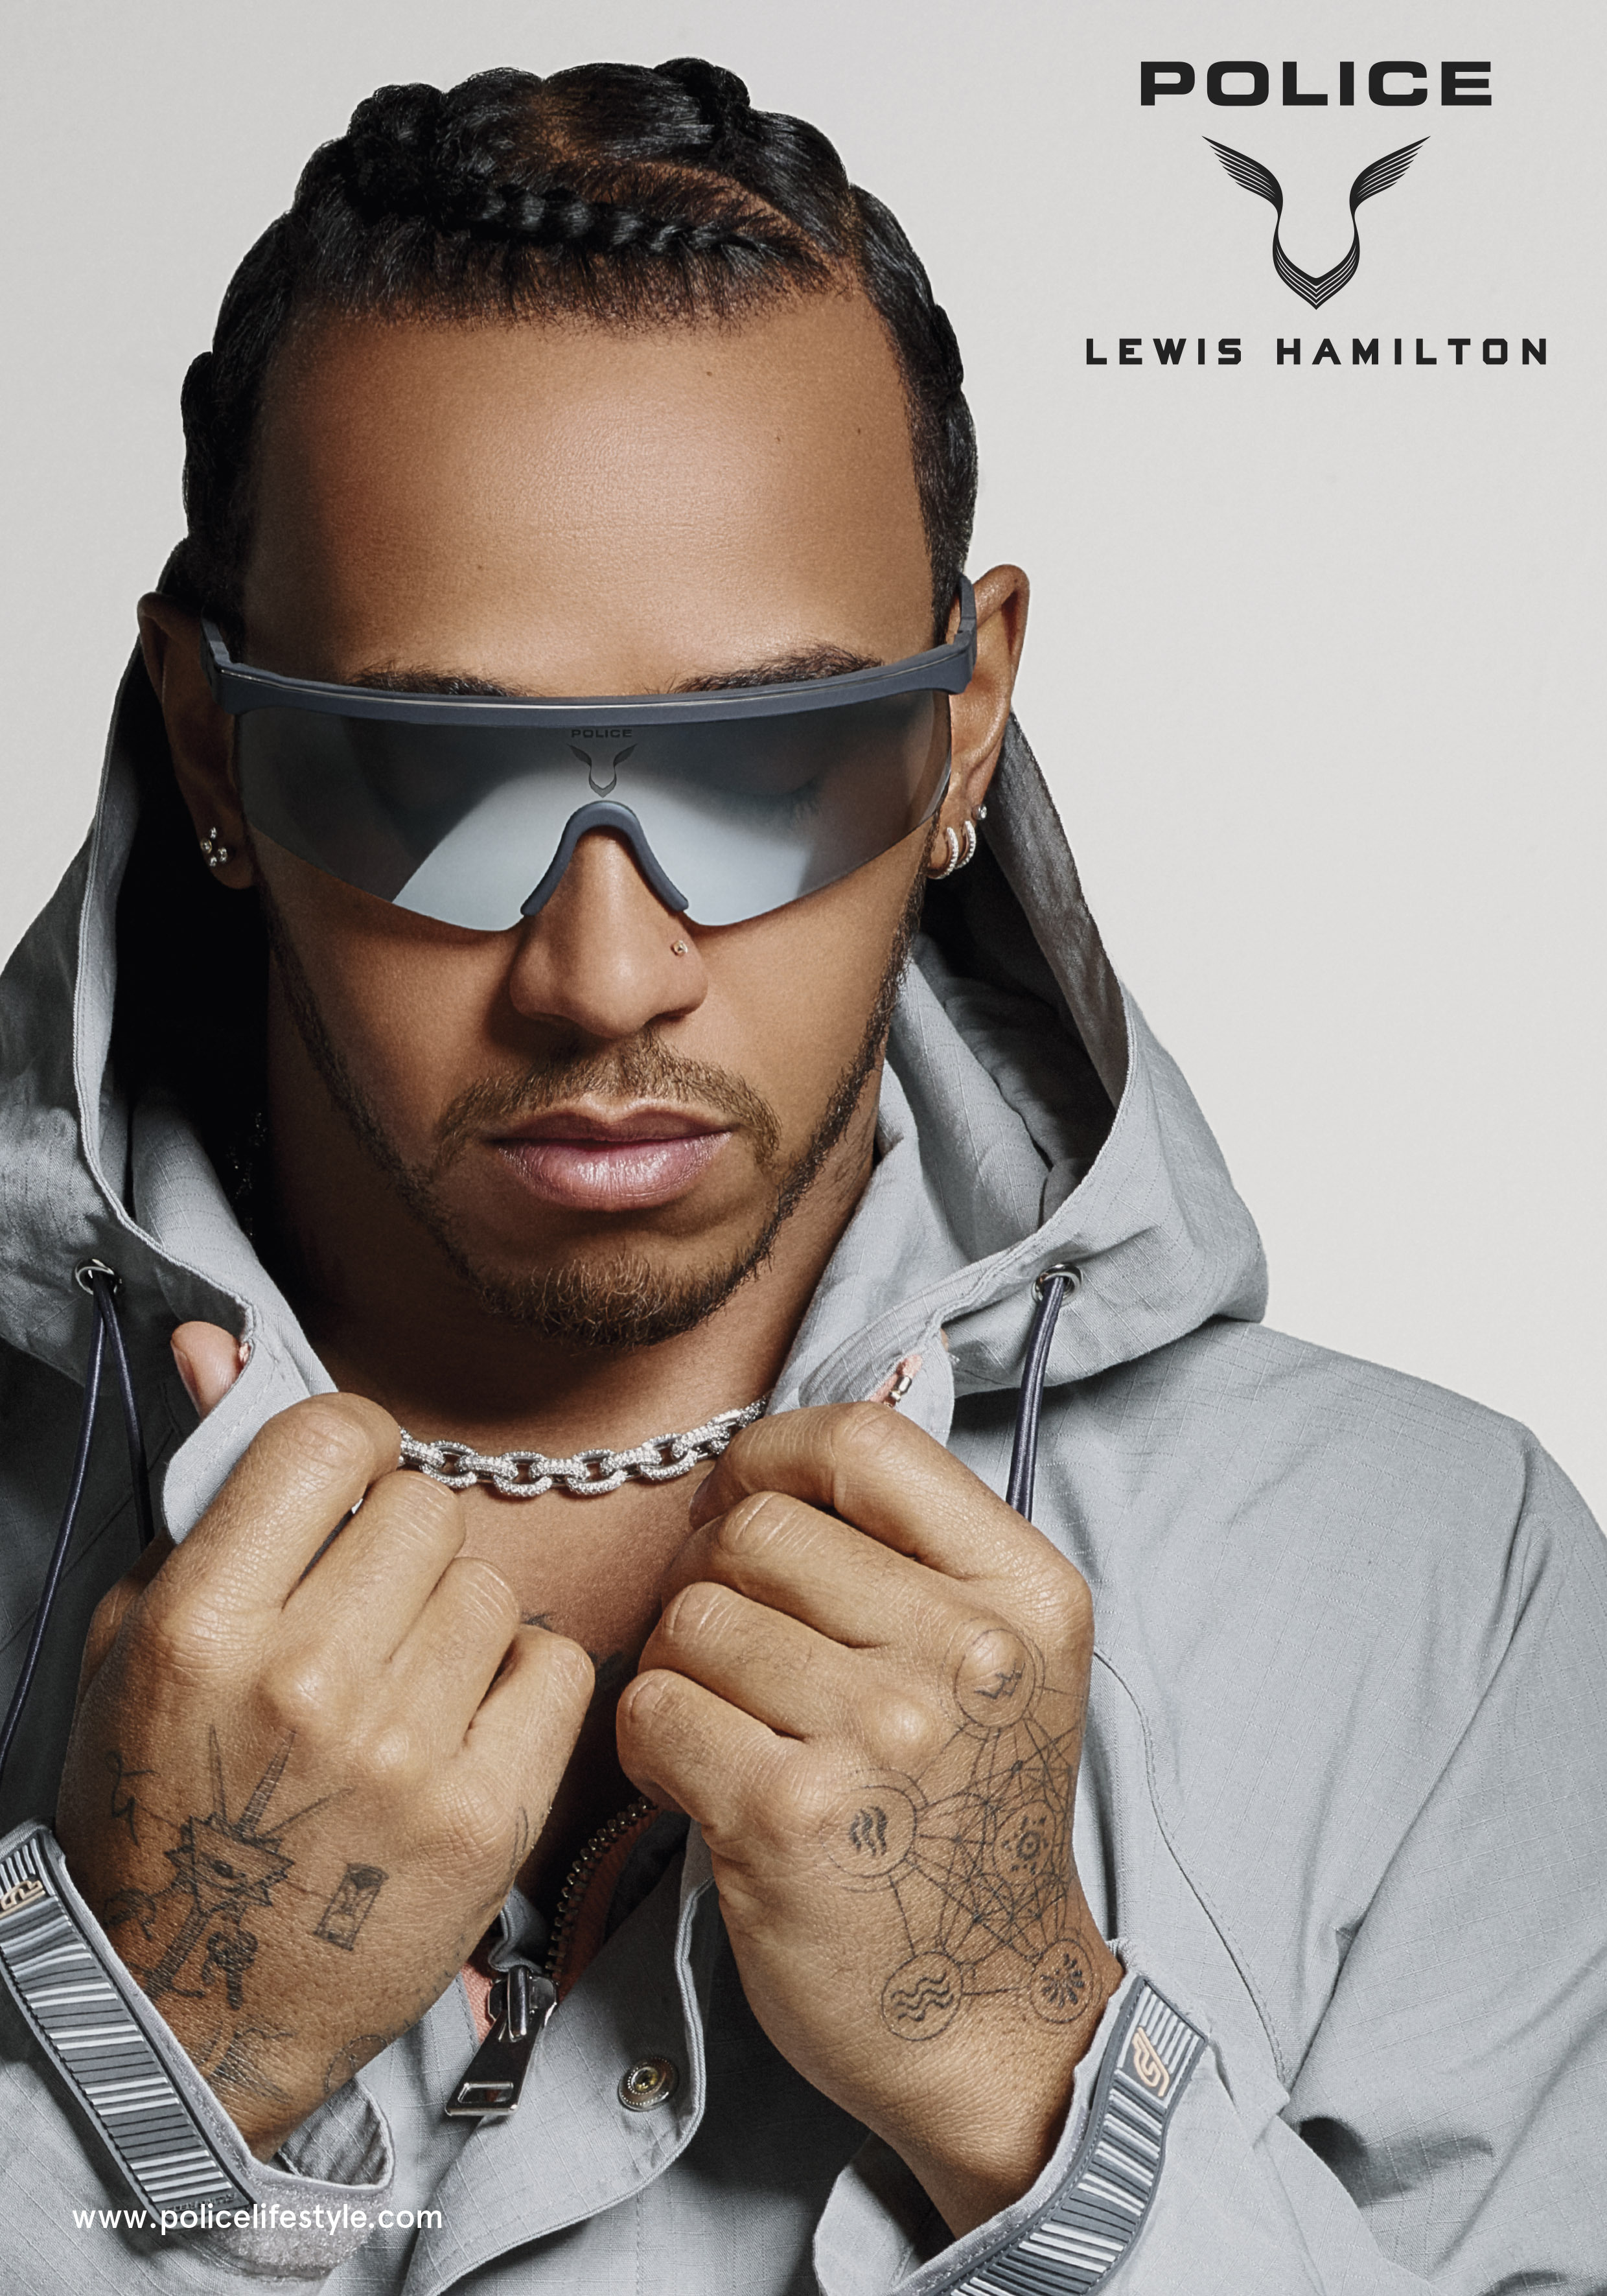 时尚与赛车的融合|POLICE x Lewis Hamilton眼镜系列全球首秀